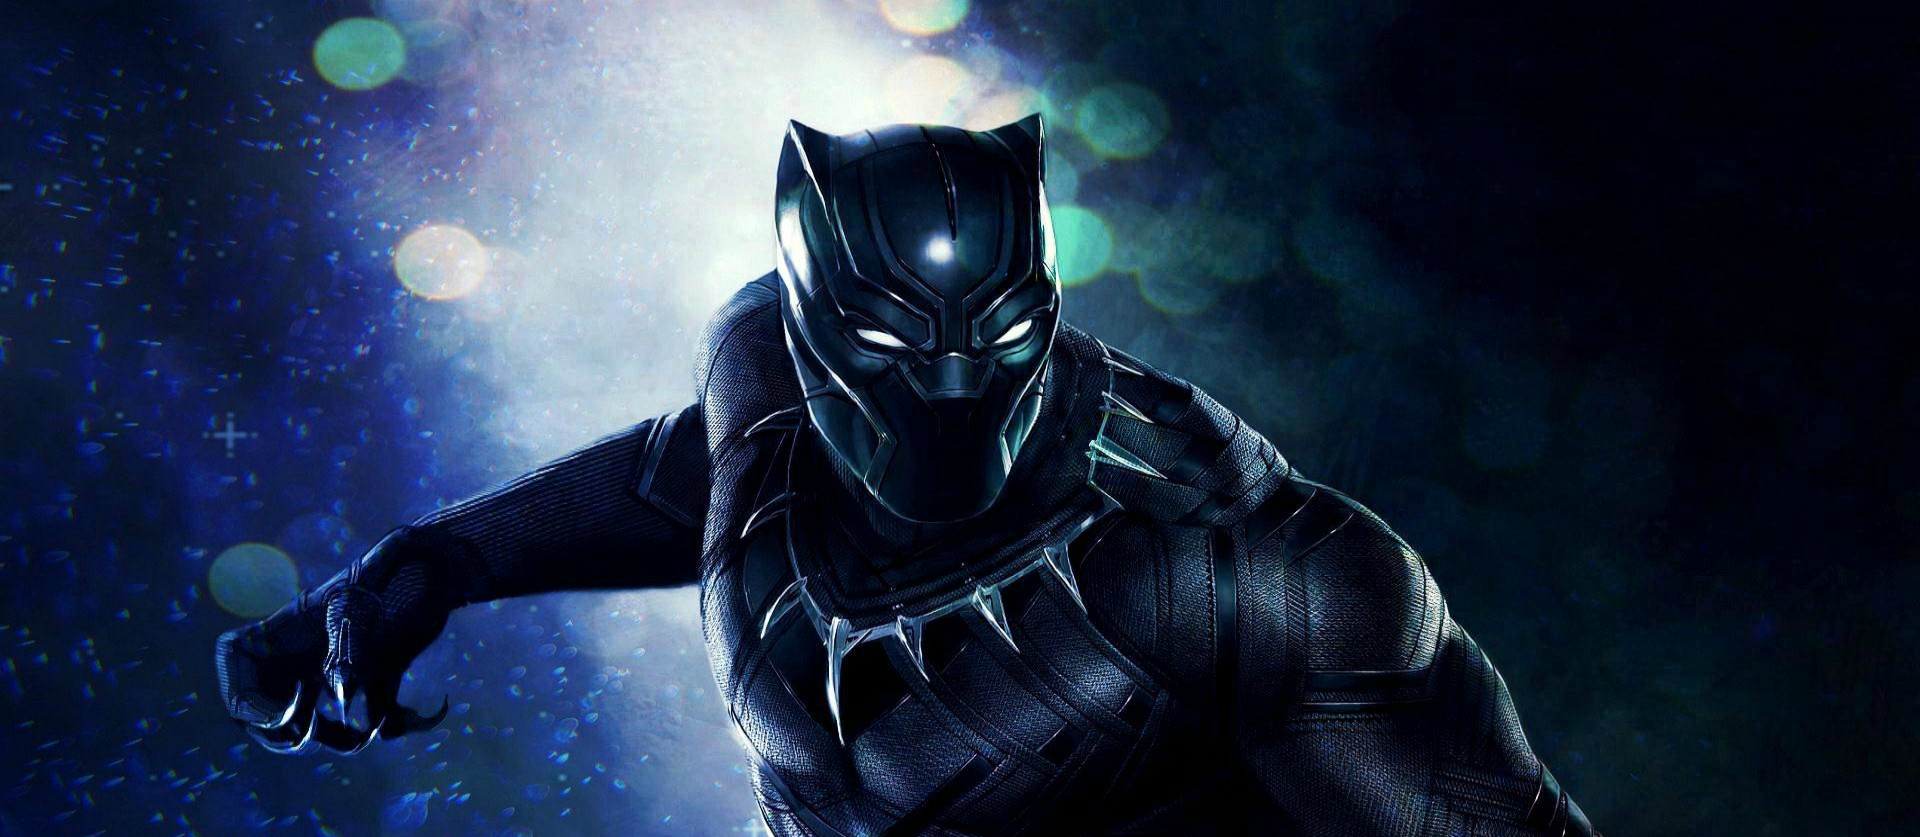 Black Panther’s stunt team don their own mocap super-suit: Xsens MVN